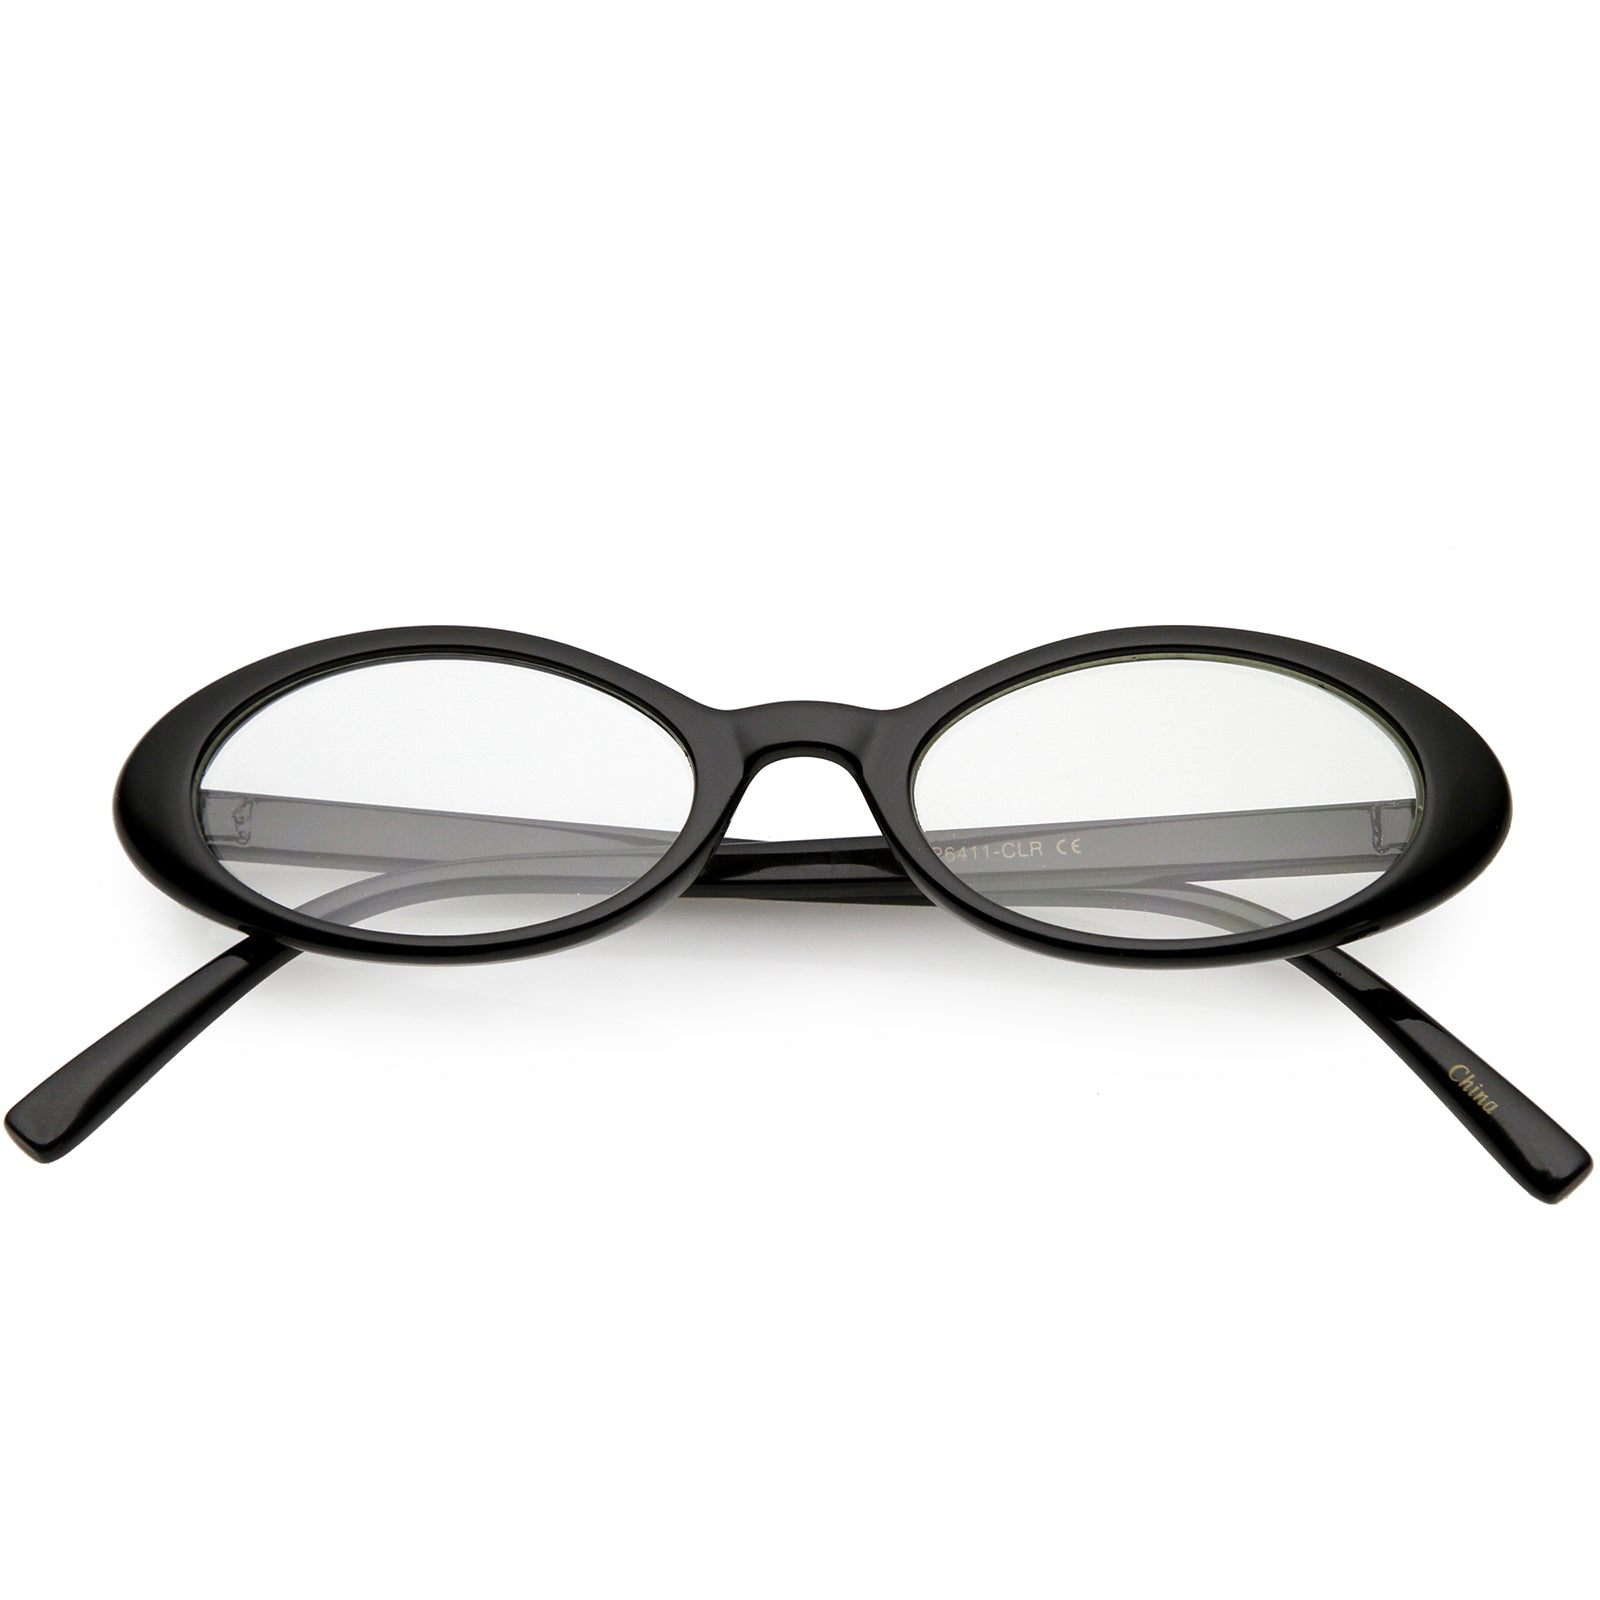 Shop THE 405 Slim Sports Vintage Sunglasses | Giant Vintage Sunglasses